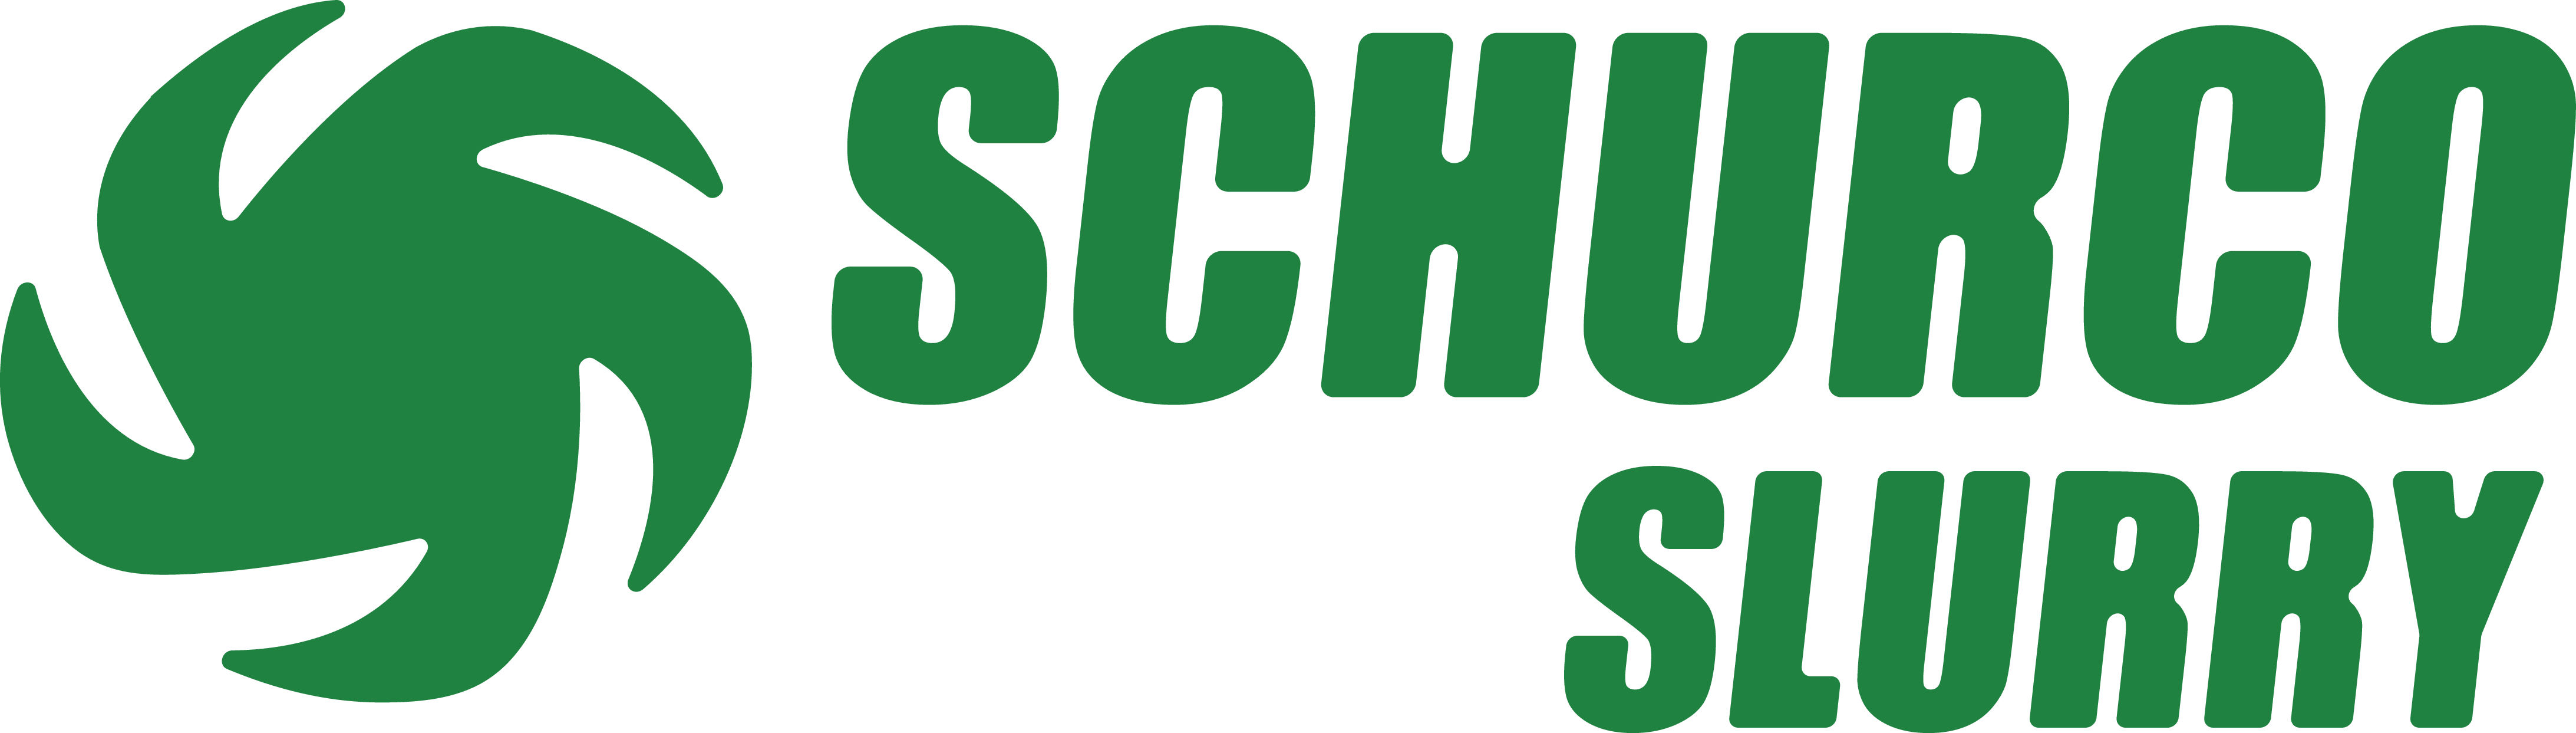 Schurcoslurry logo